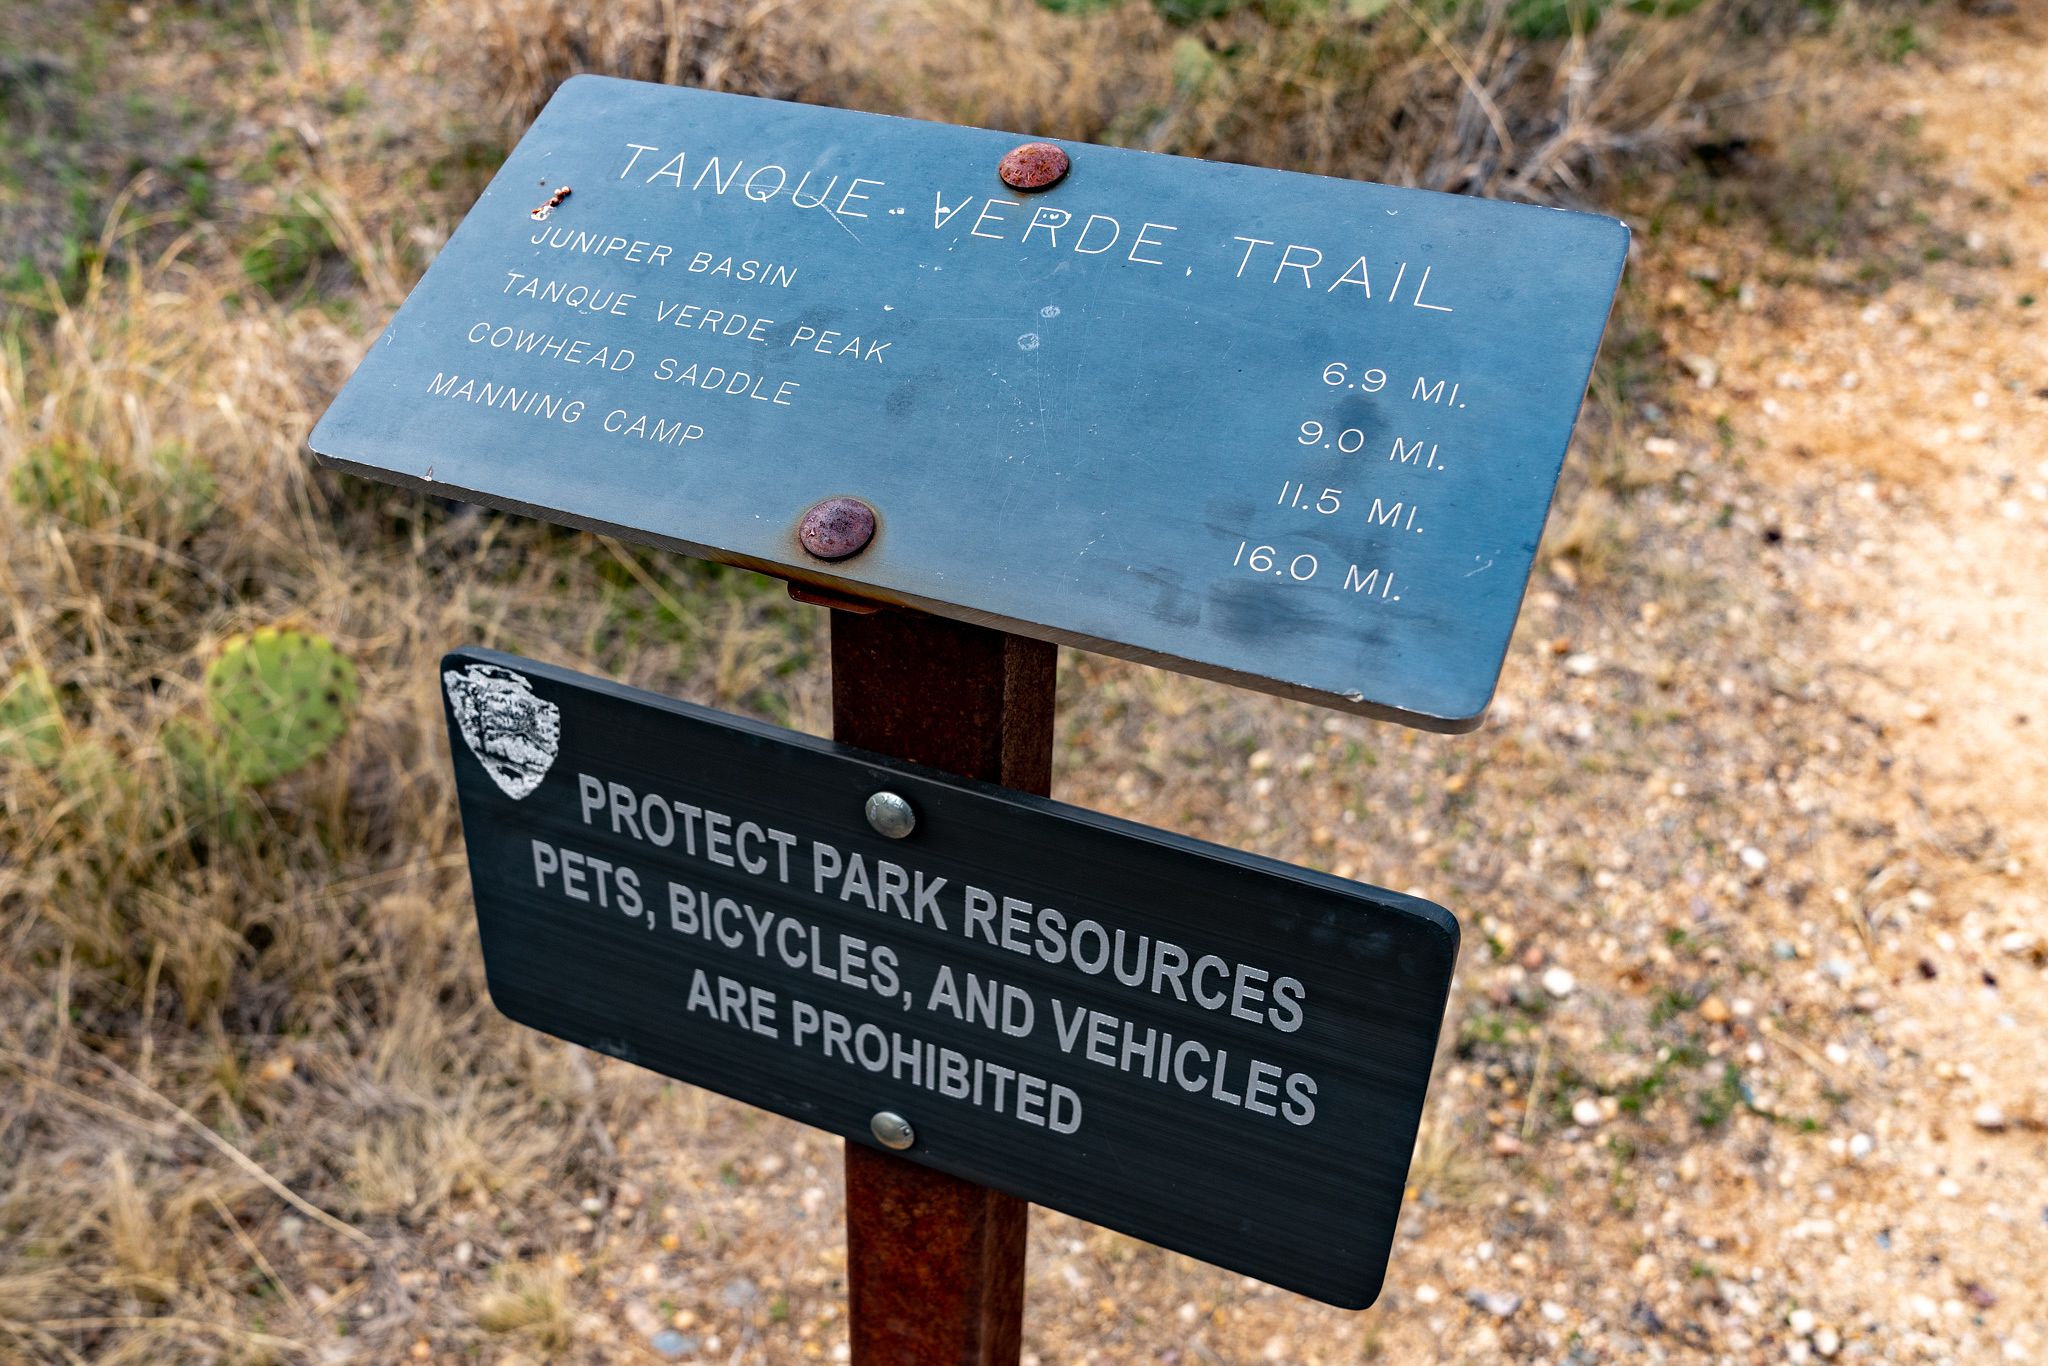 Tanque Verde Ridge Trail